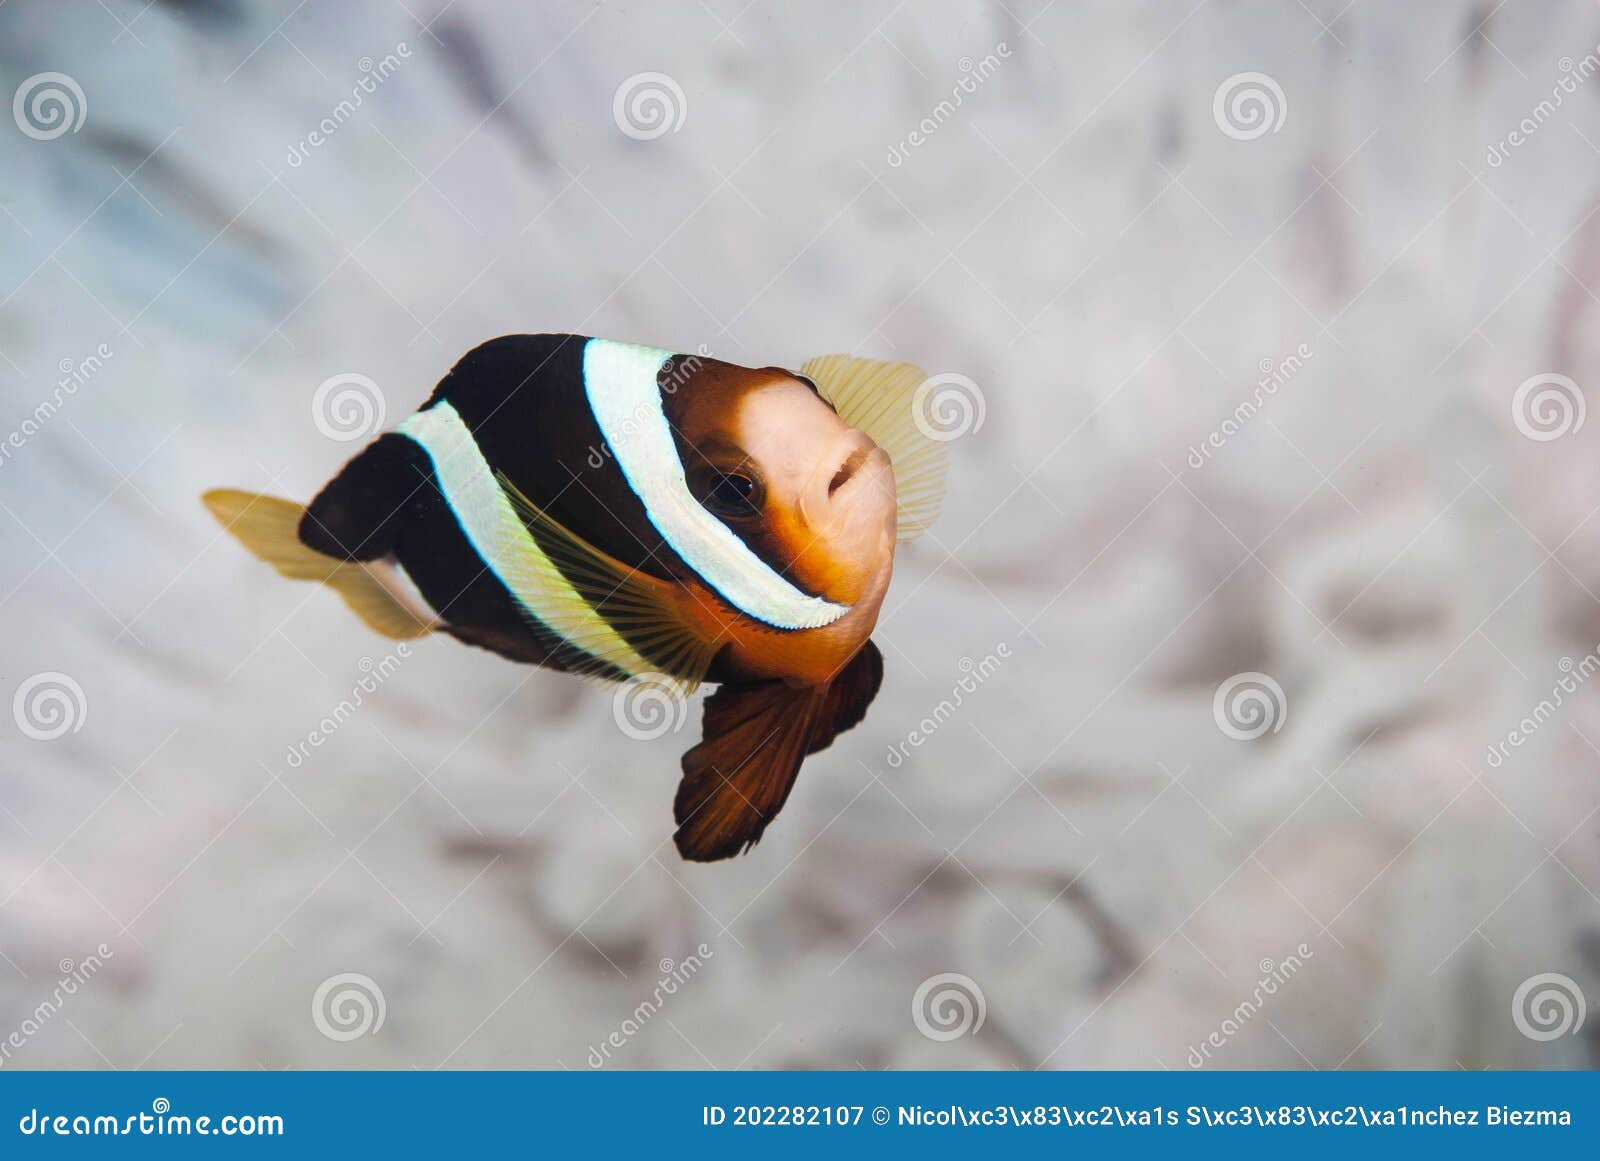 clark anemone fish amphiprion clarkii